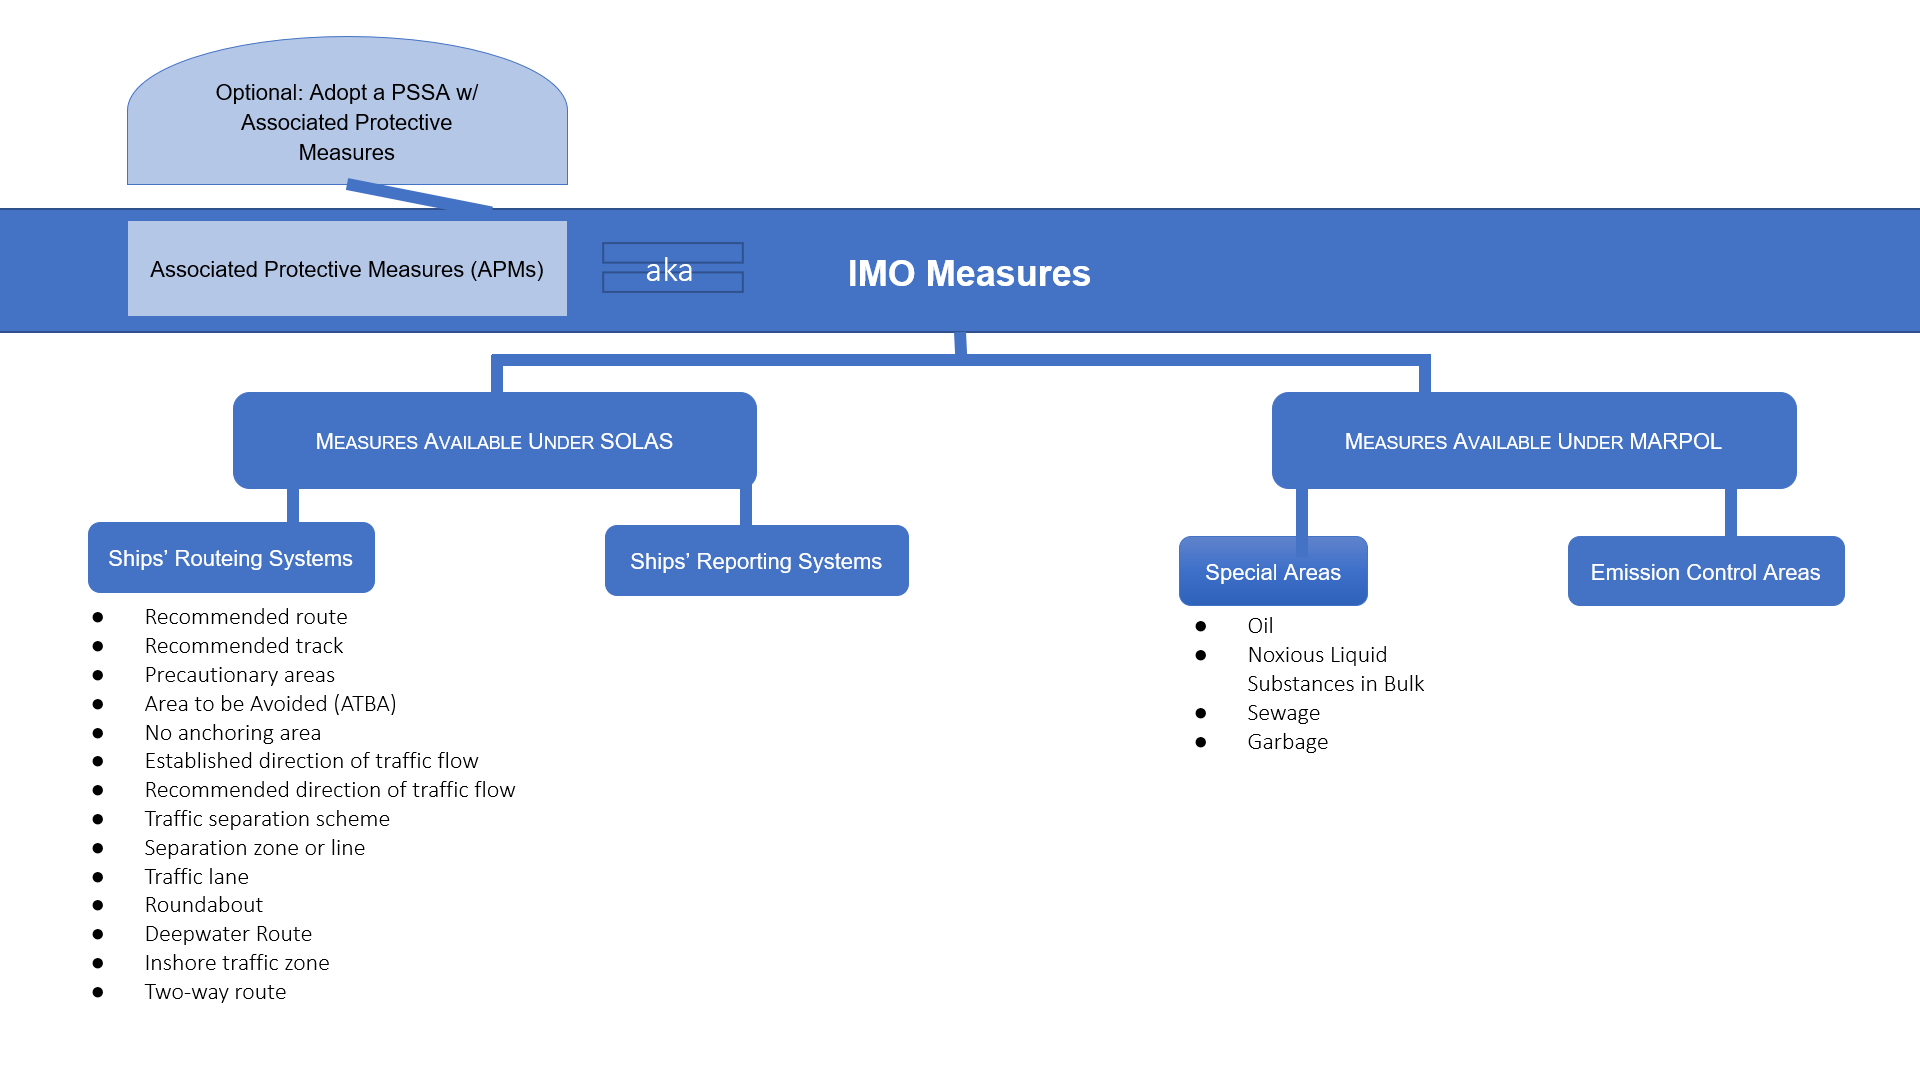 Menu of Available IMO Measures umbrella diagram